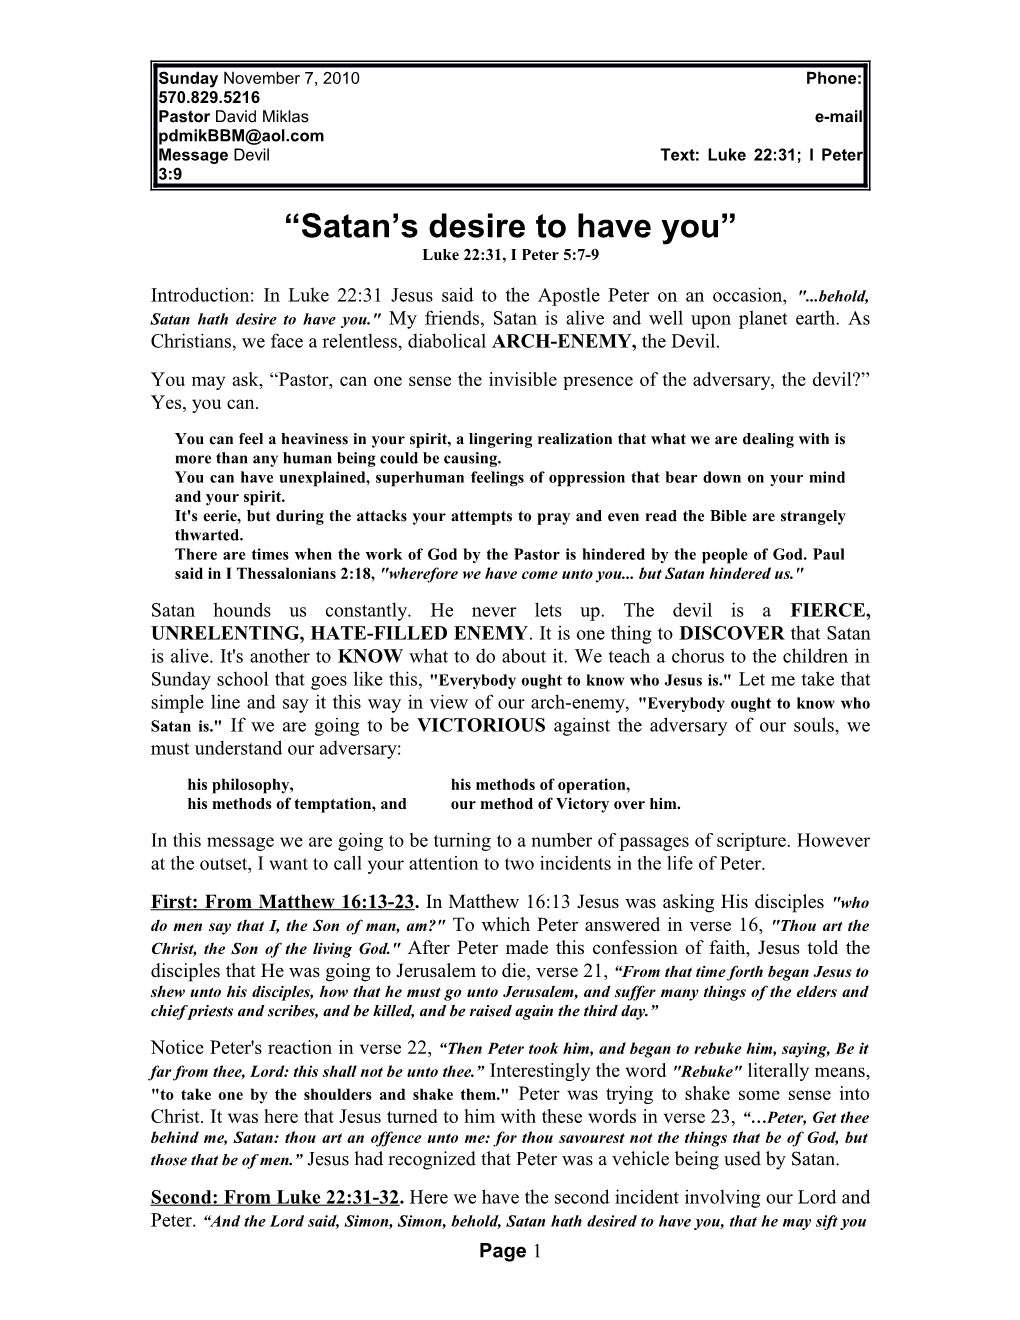 Satan's Desire to Have You